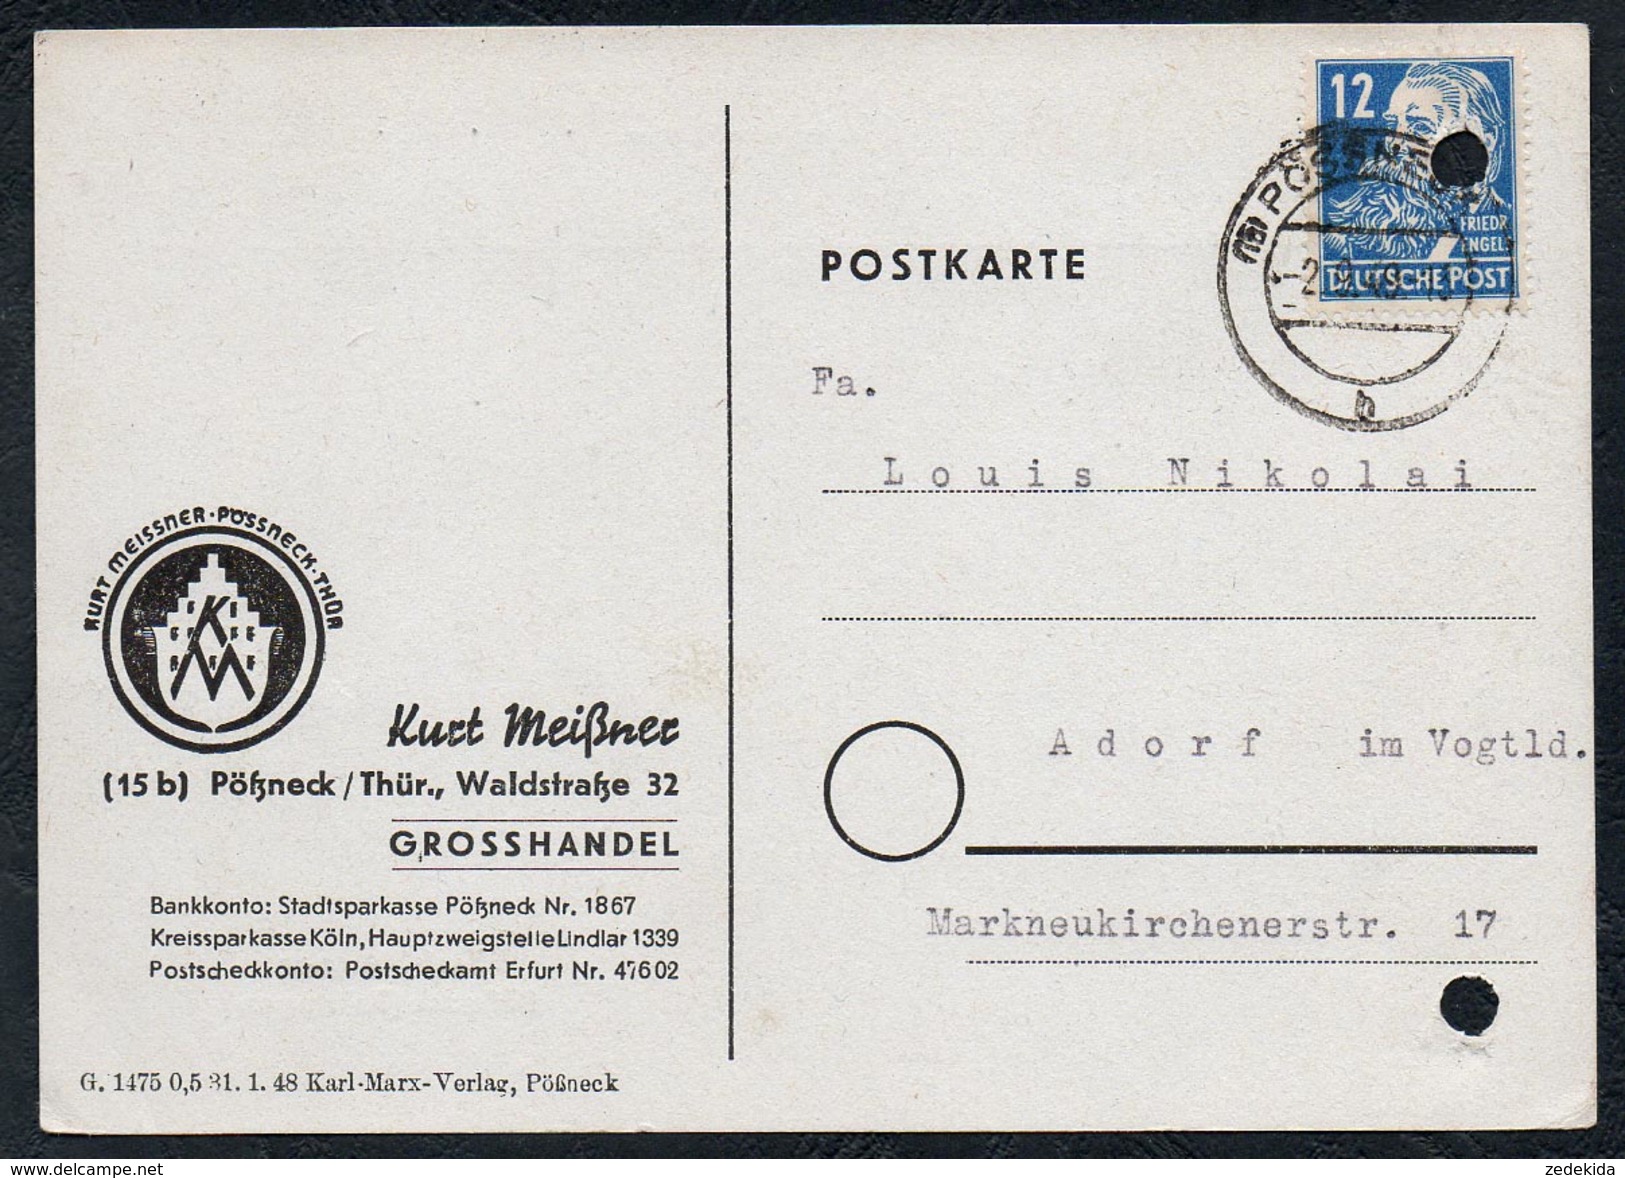 A6239 - Alte Postkarte - Bedarfspost - Pössneck - Pößneck - Kurt Meißner Grosshandlung Nach Adorf 1949 - Pössneck